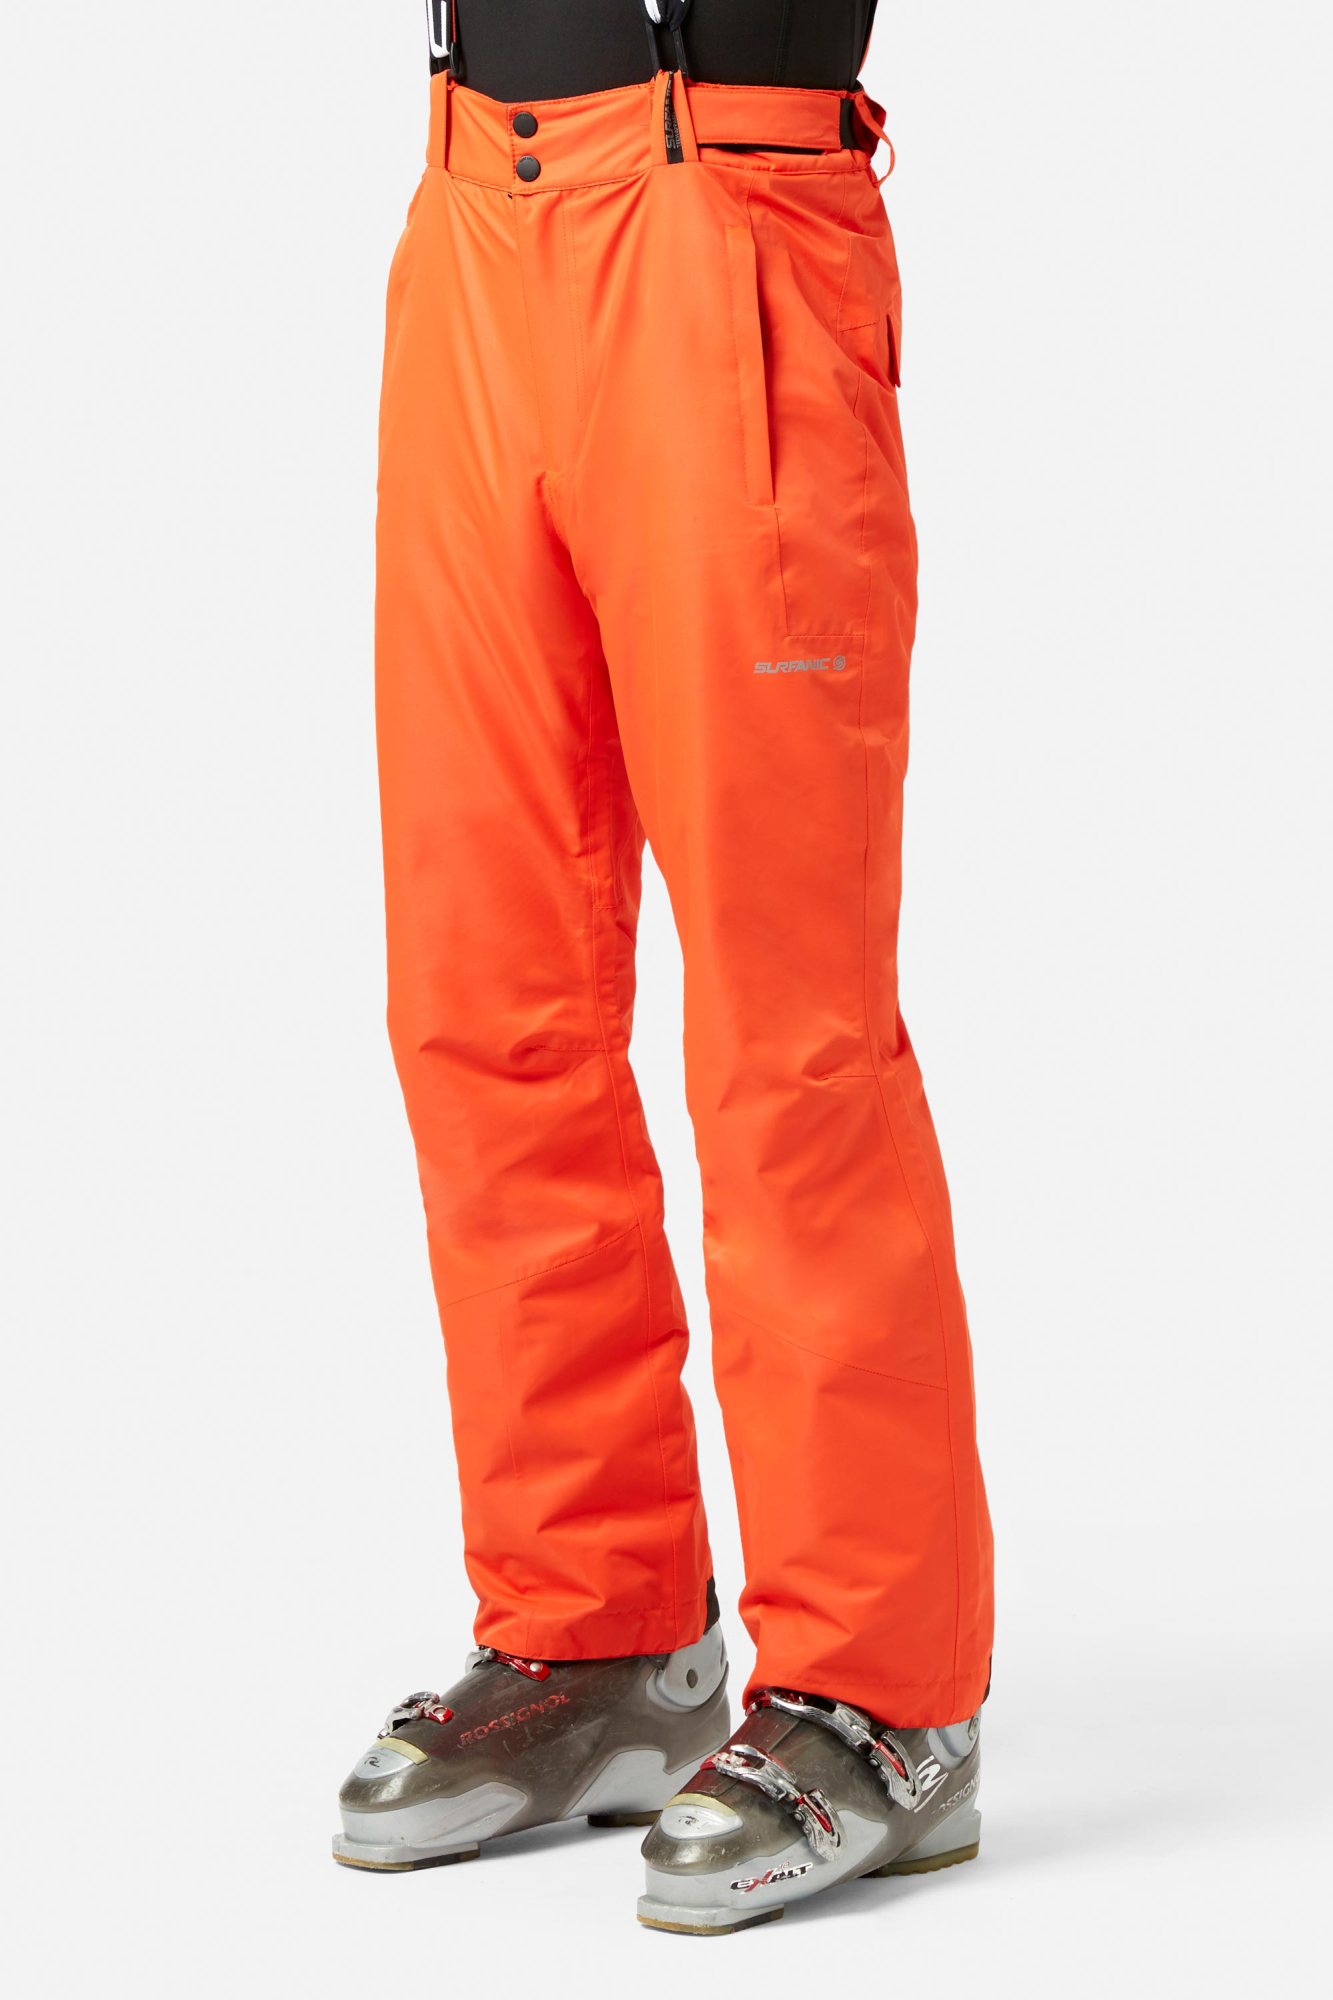 Surfanic Mens Comrade Surftex Pant Orange - Size: 3XL